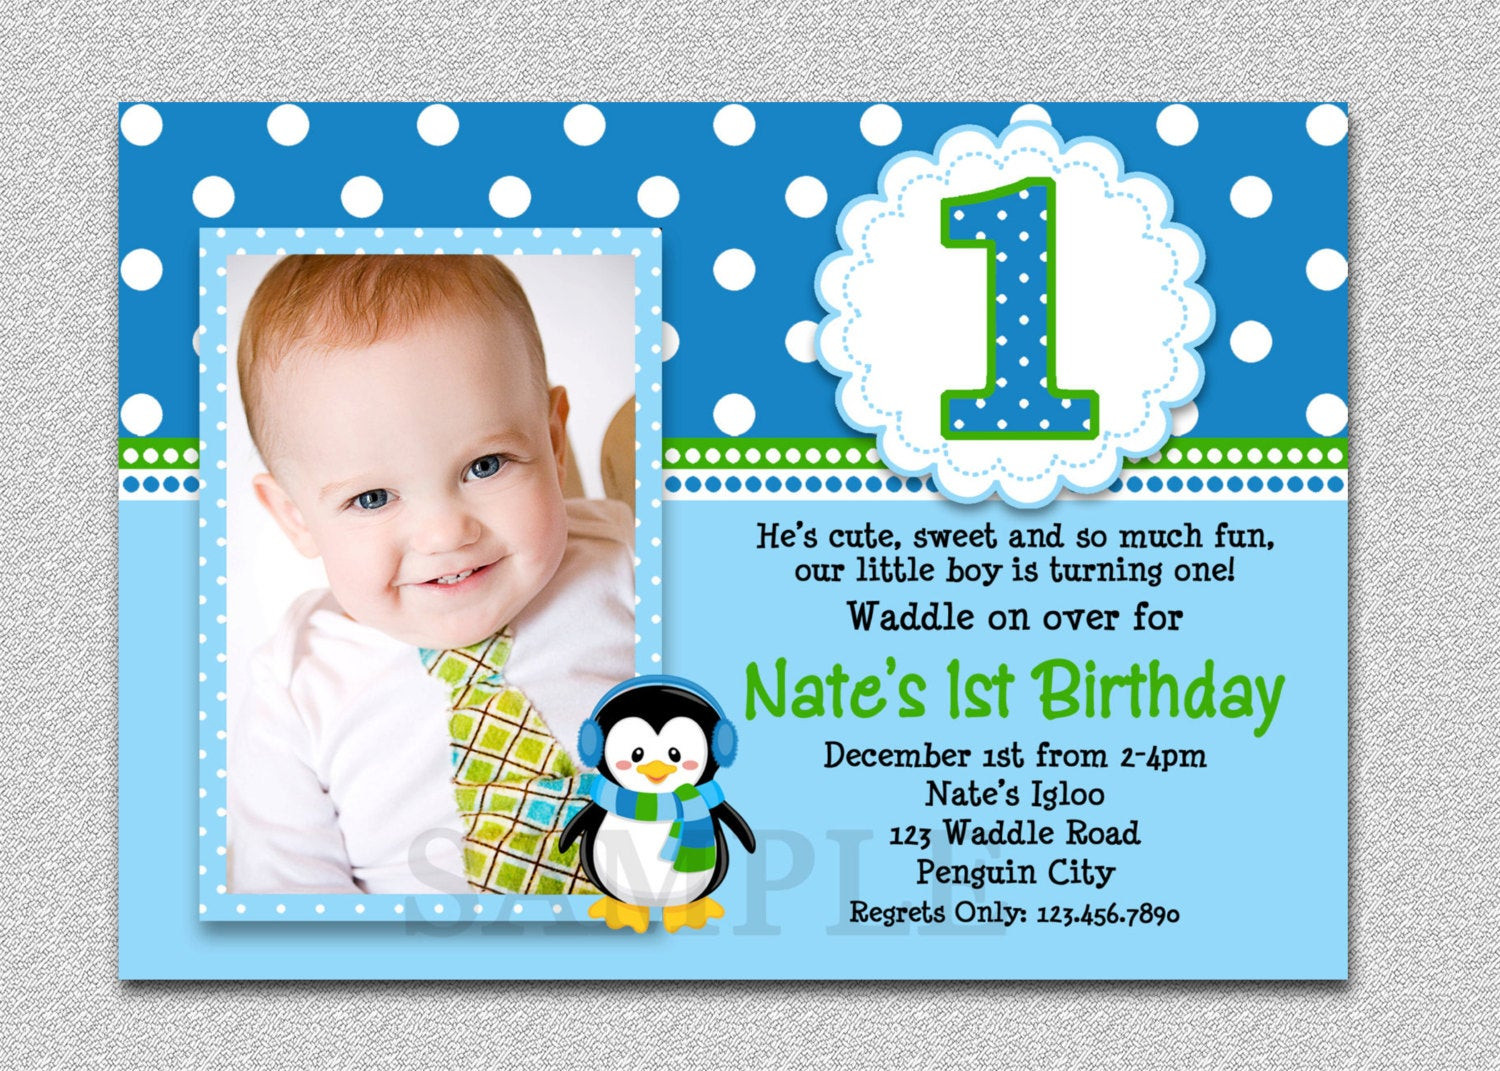 Best ideas about Boy 1st Birthday Invitations
. Save or Pin Penguin Birthday Invitation Penguin 1st Birthday Party Invites Now.